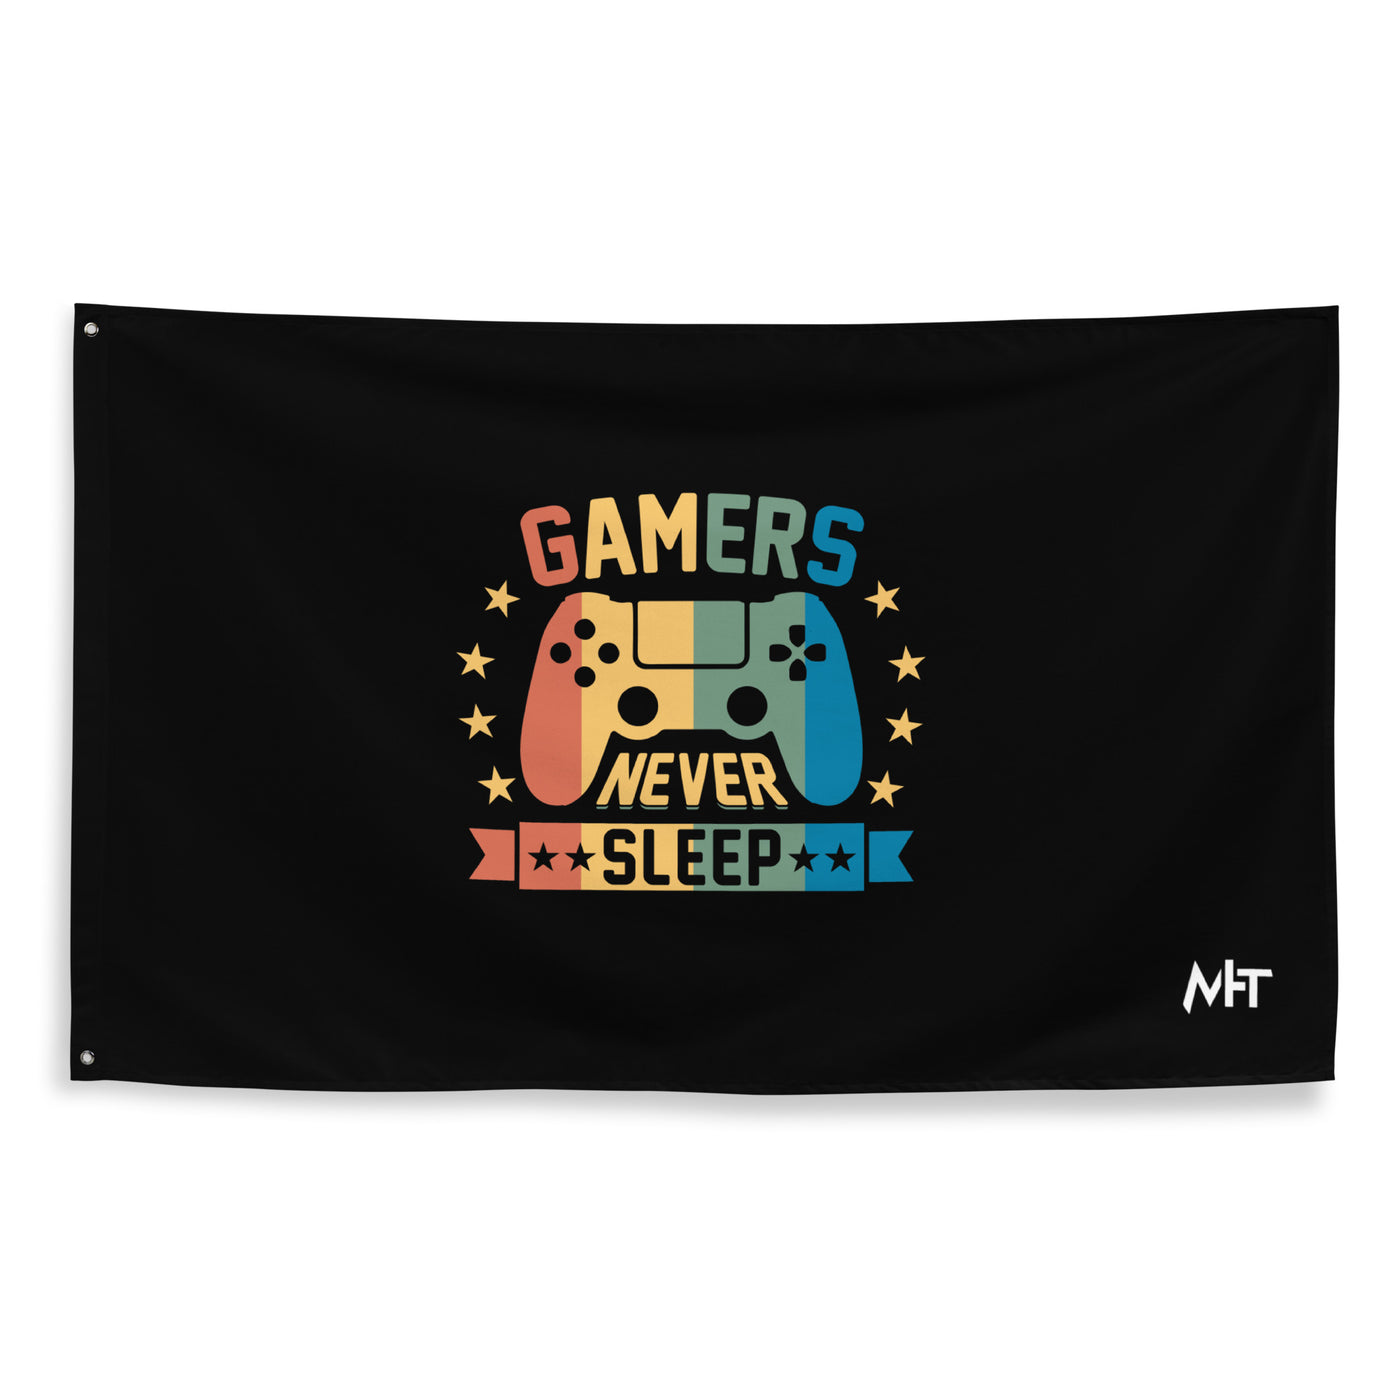 Gamers never sleep - Flag